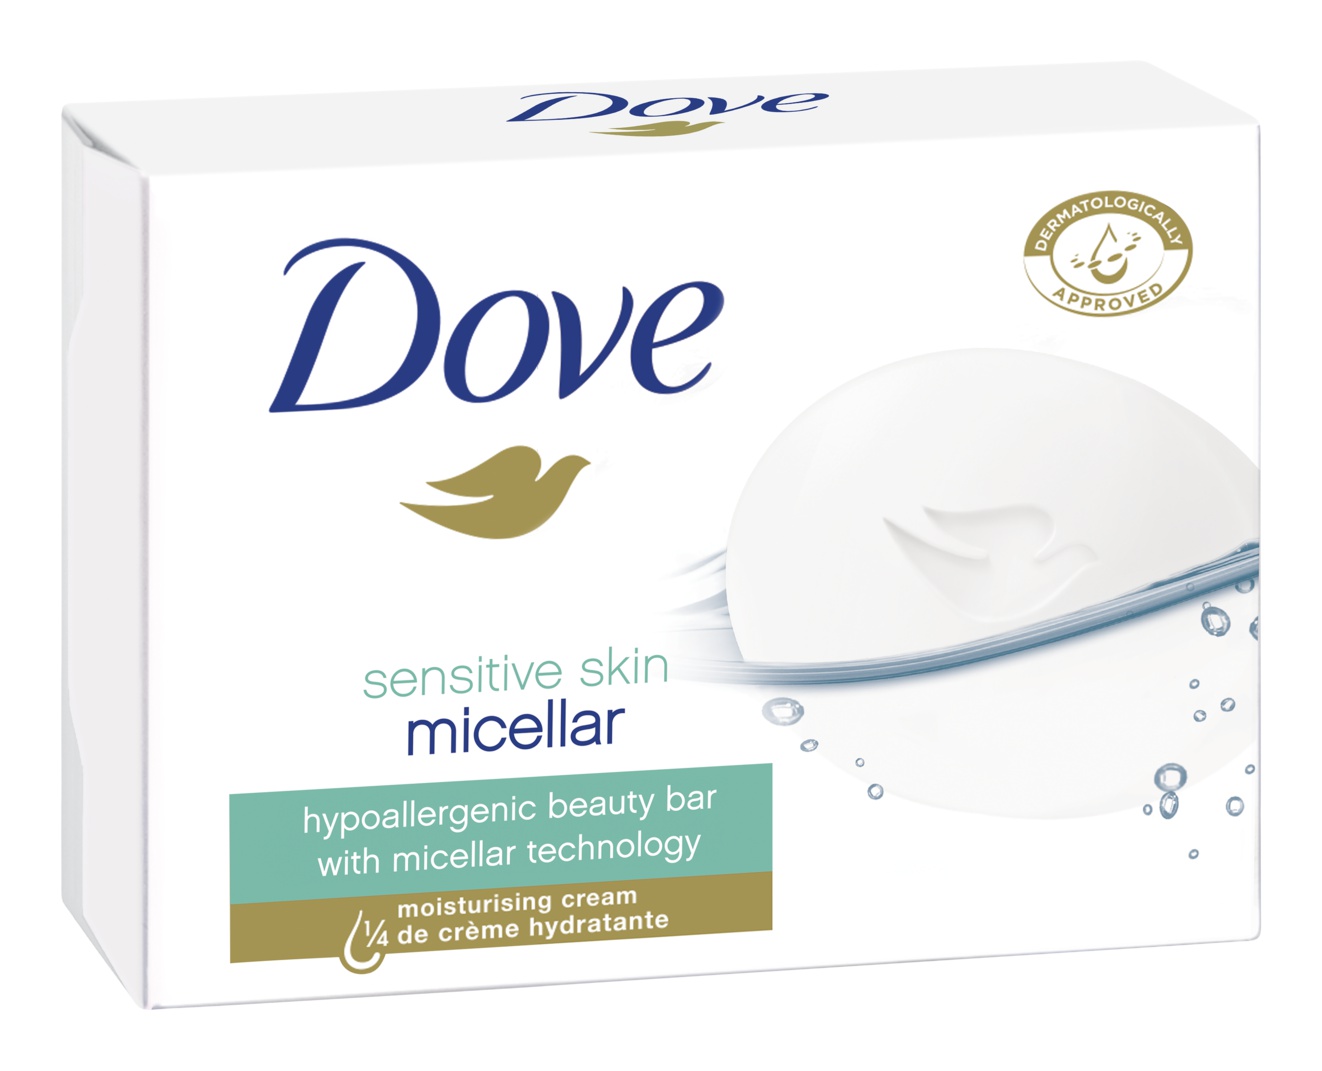 Dove Sensitive Skin Micellar Hypoallergenic Beauty Bar